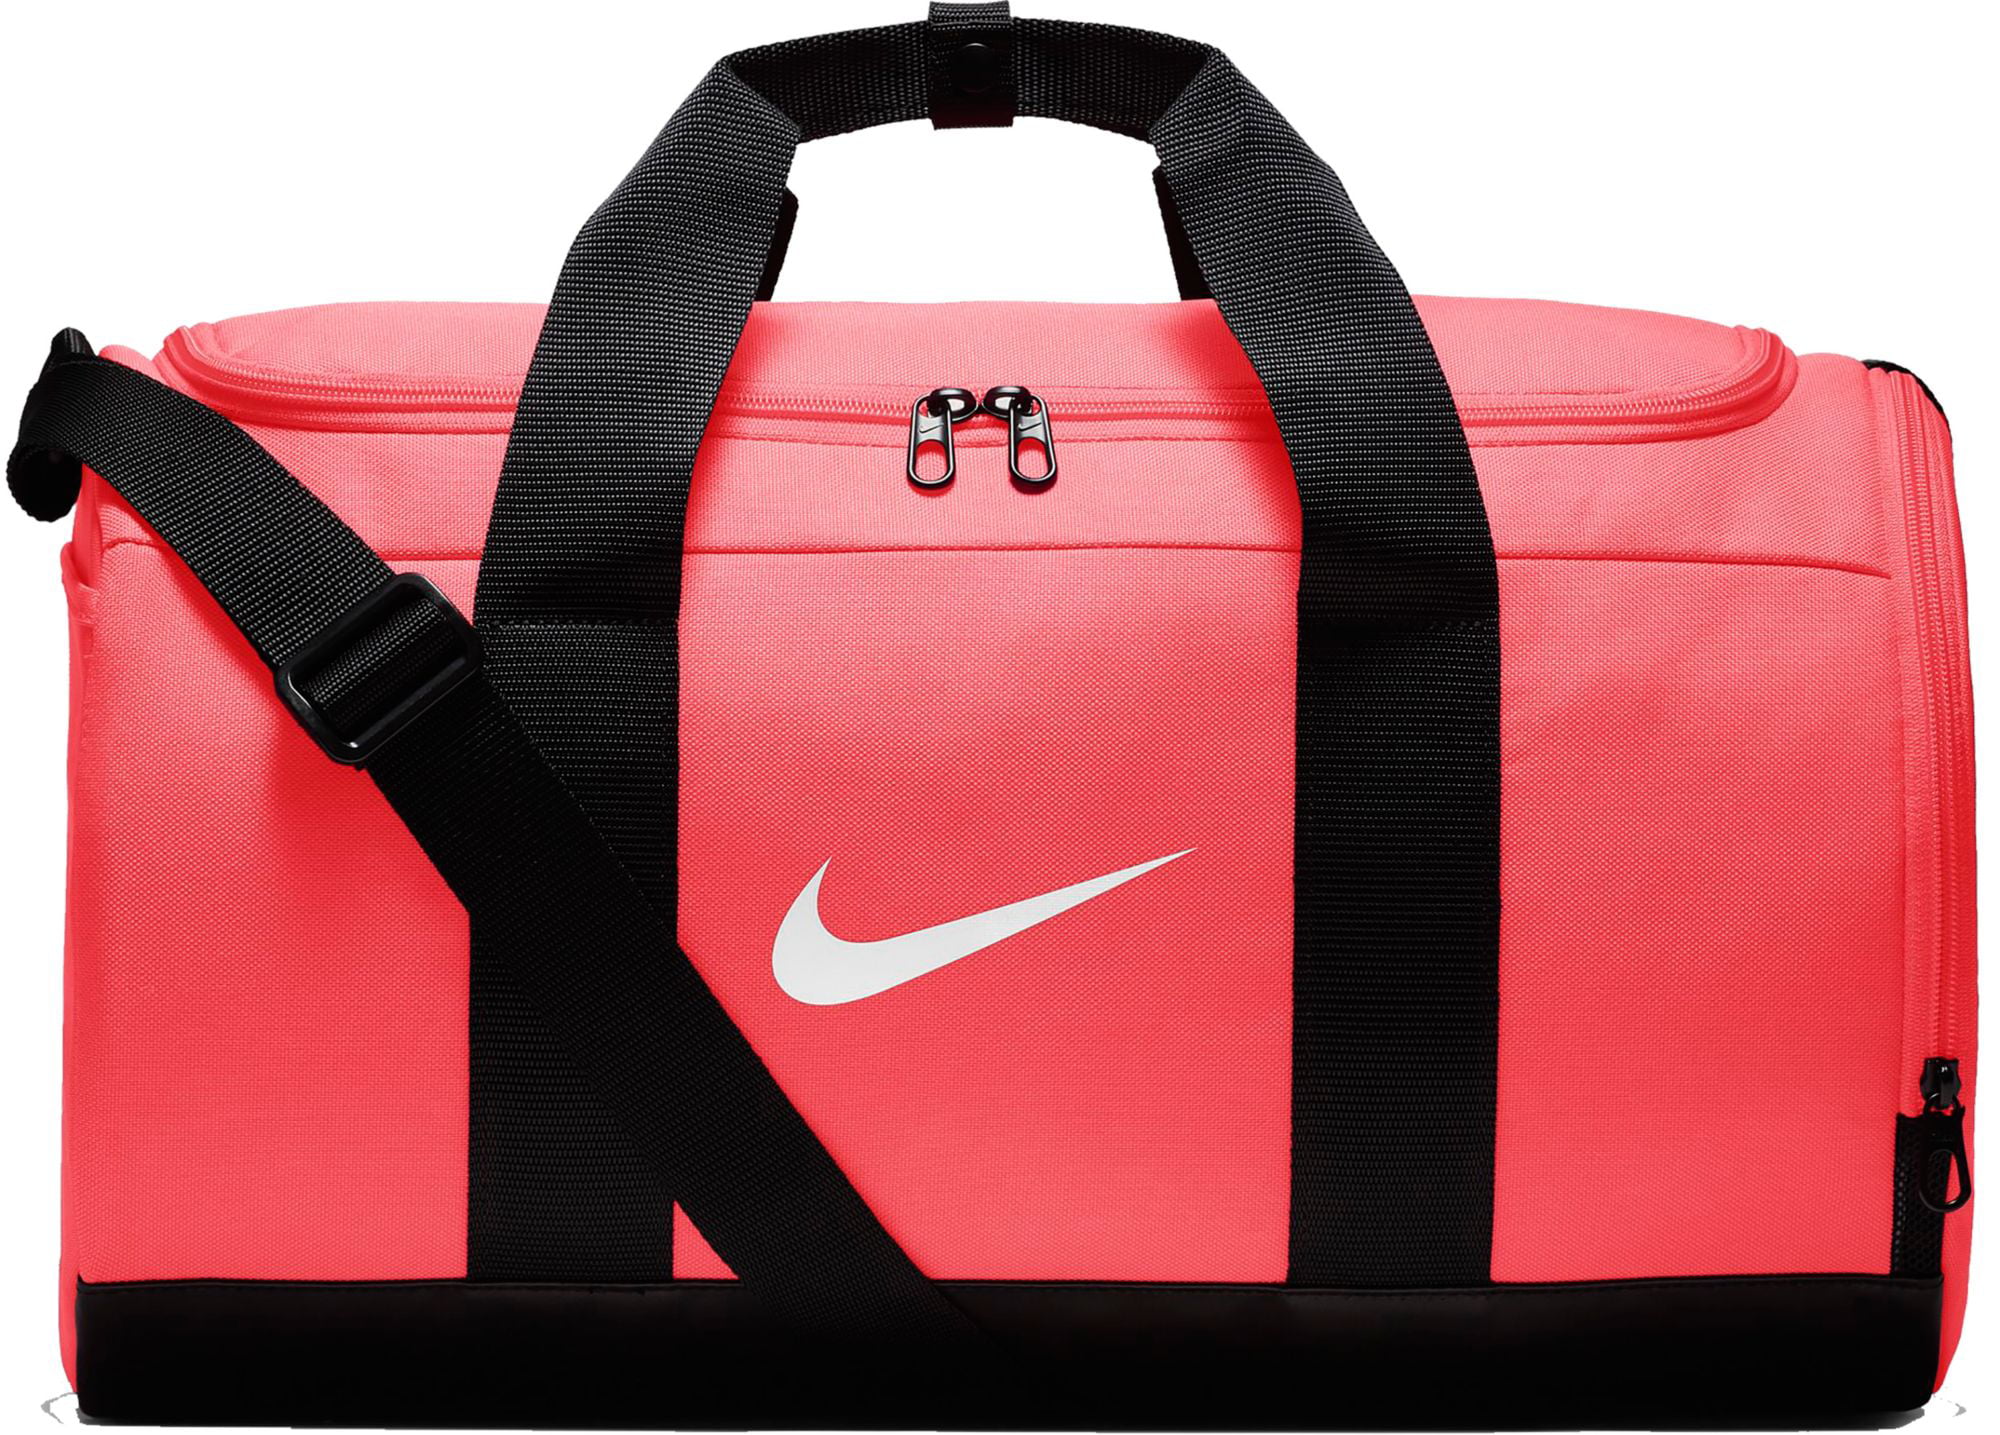 Nike - Nike Women's Team Duffle Bag - Walmart.com - Walmart.com